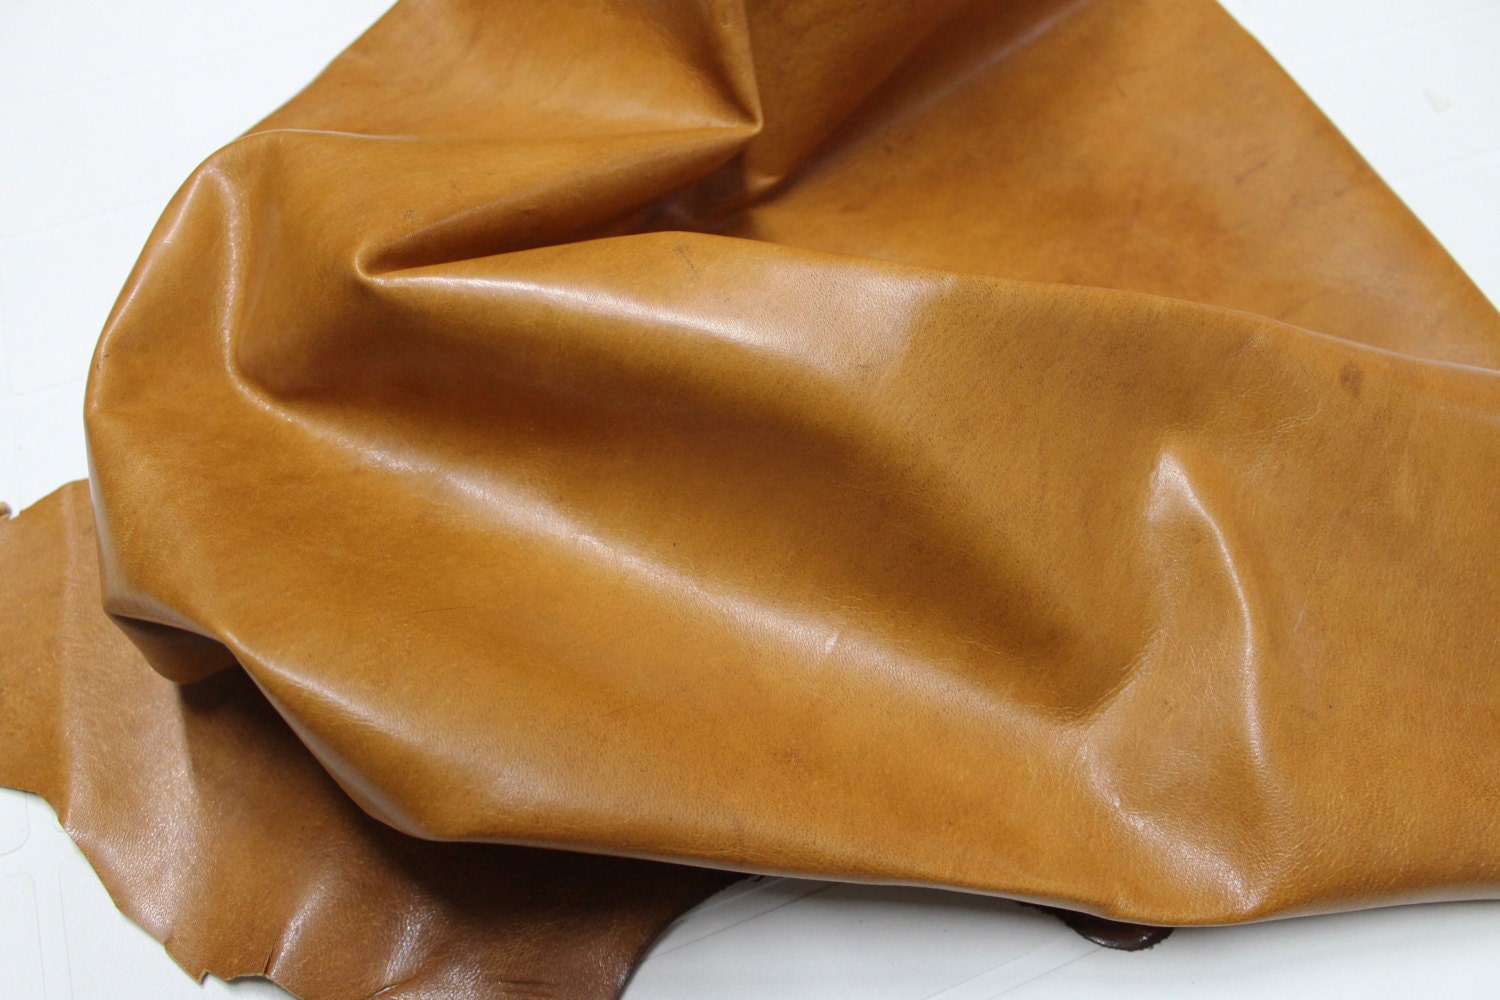 rare leather hides